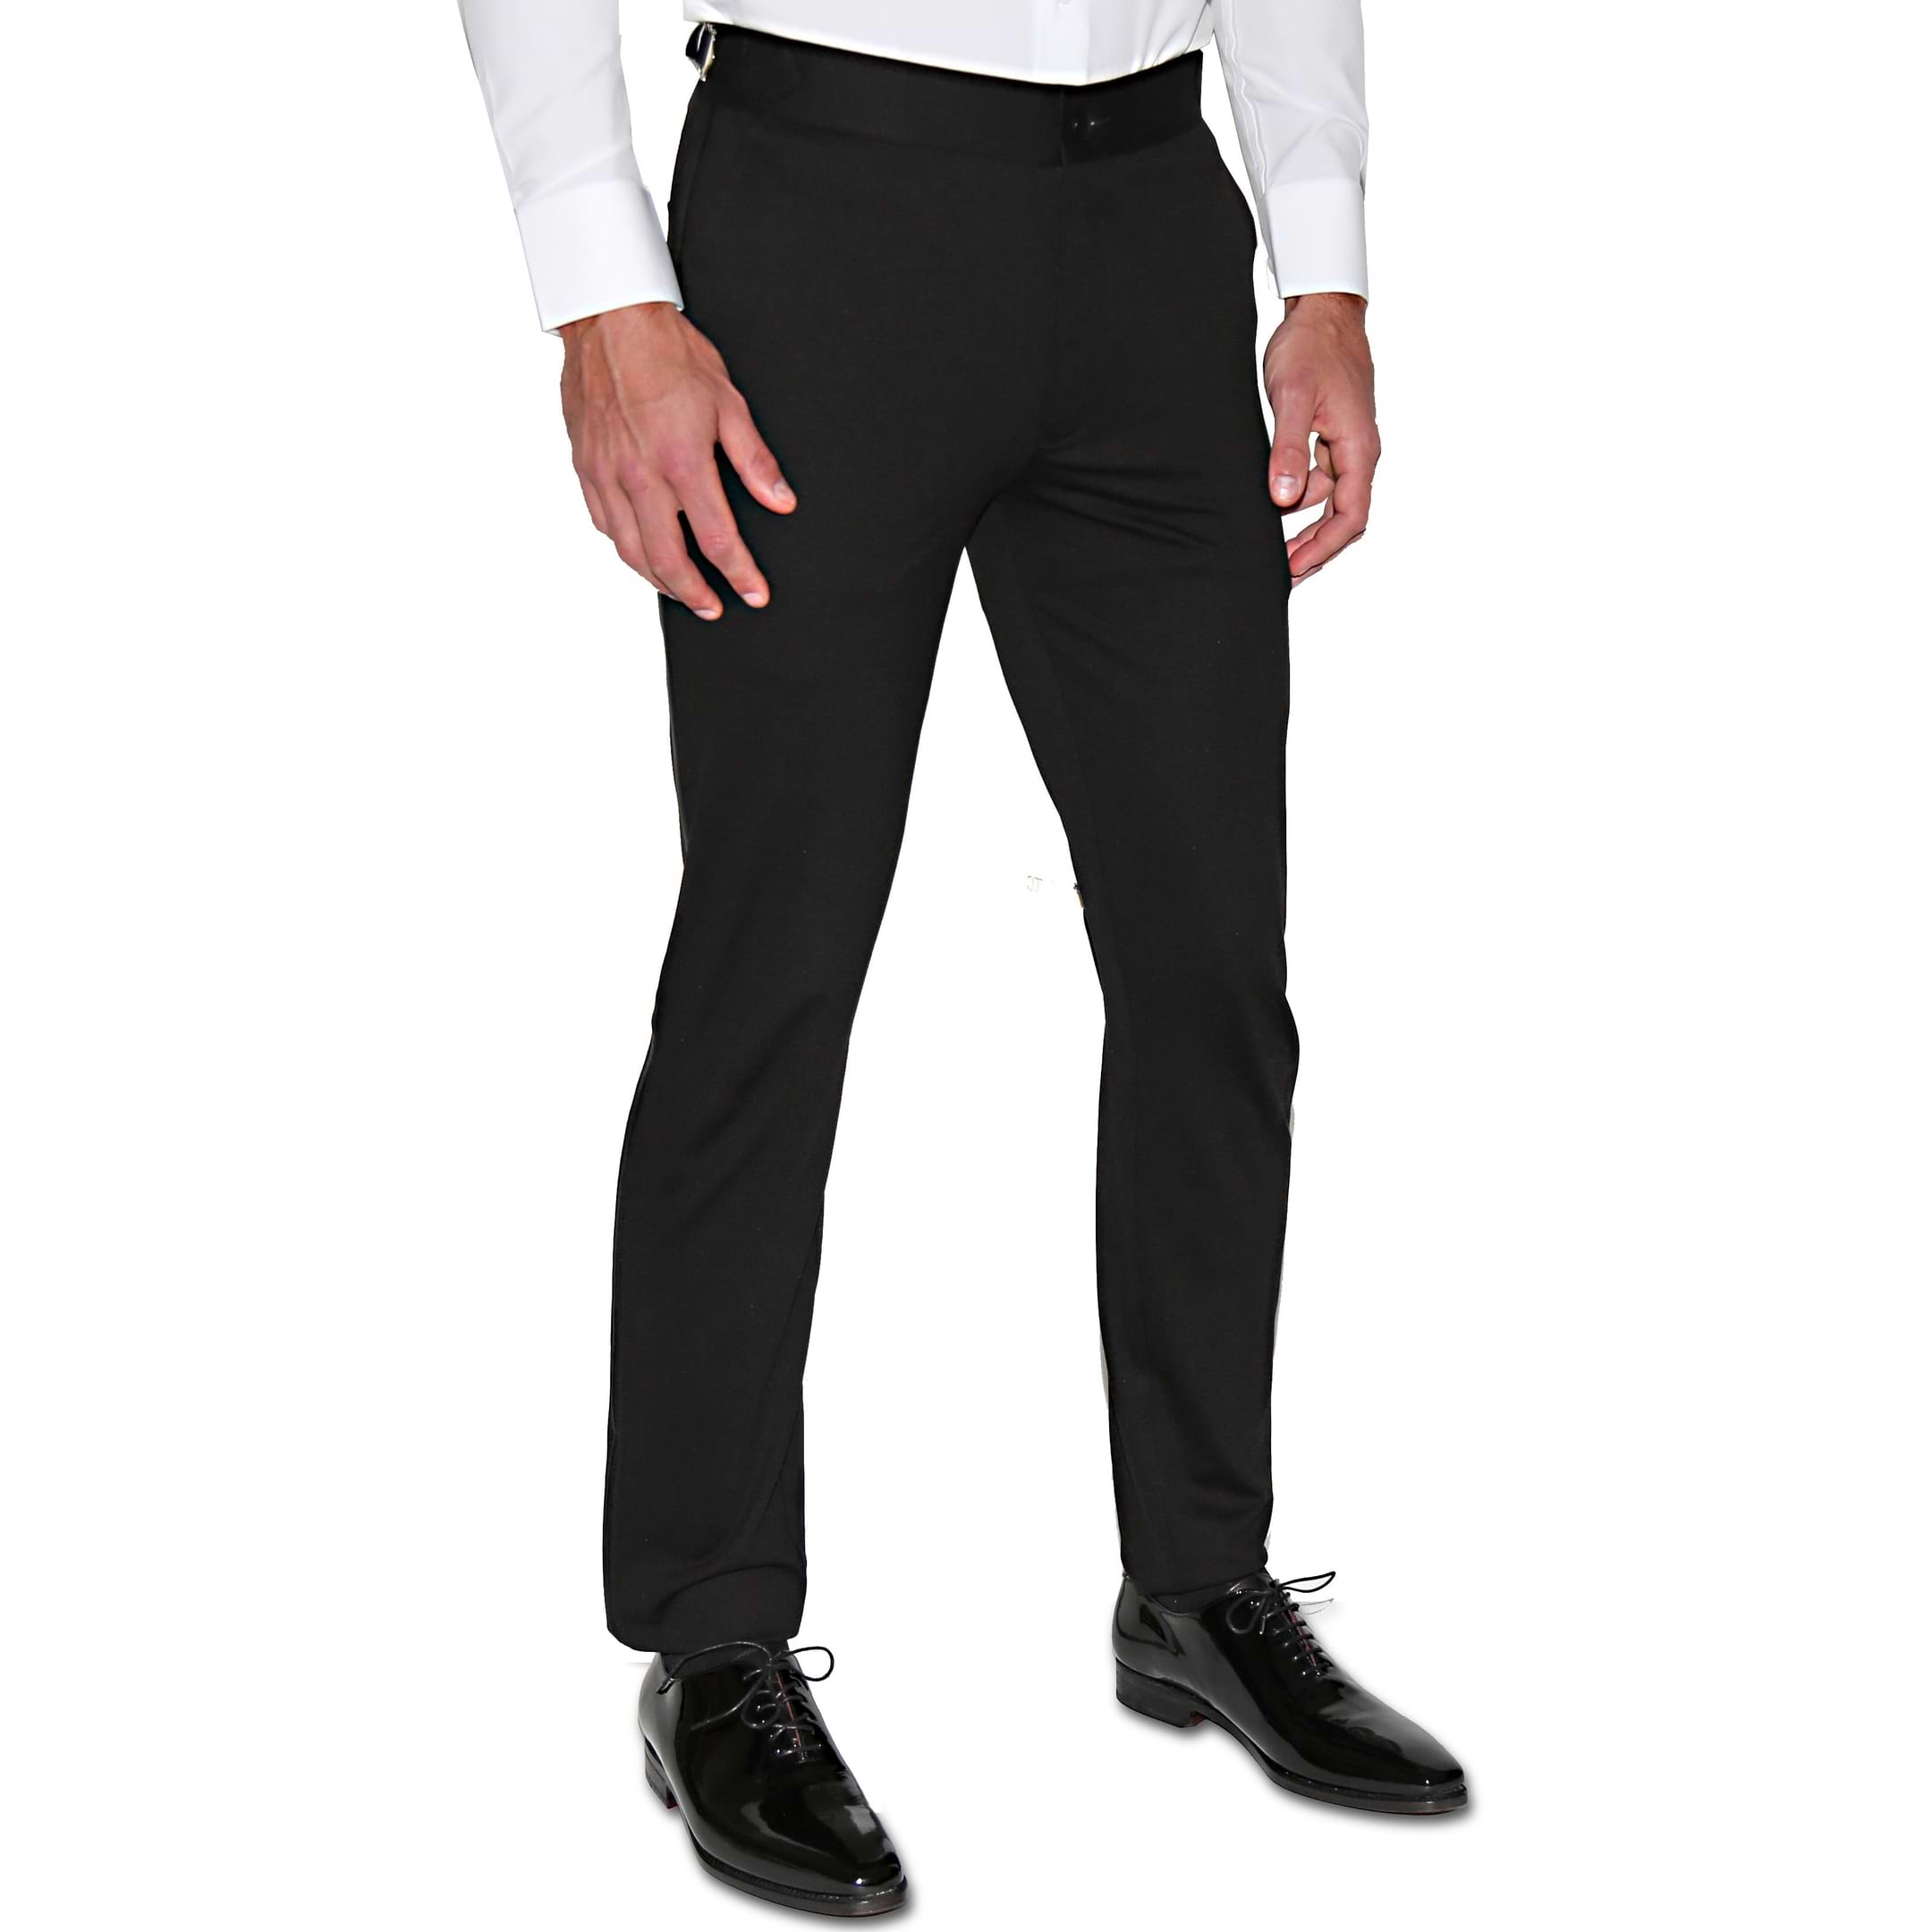 Black slim fit pants for men tailored as formal dress pants